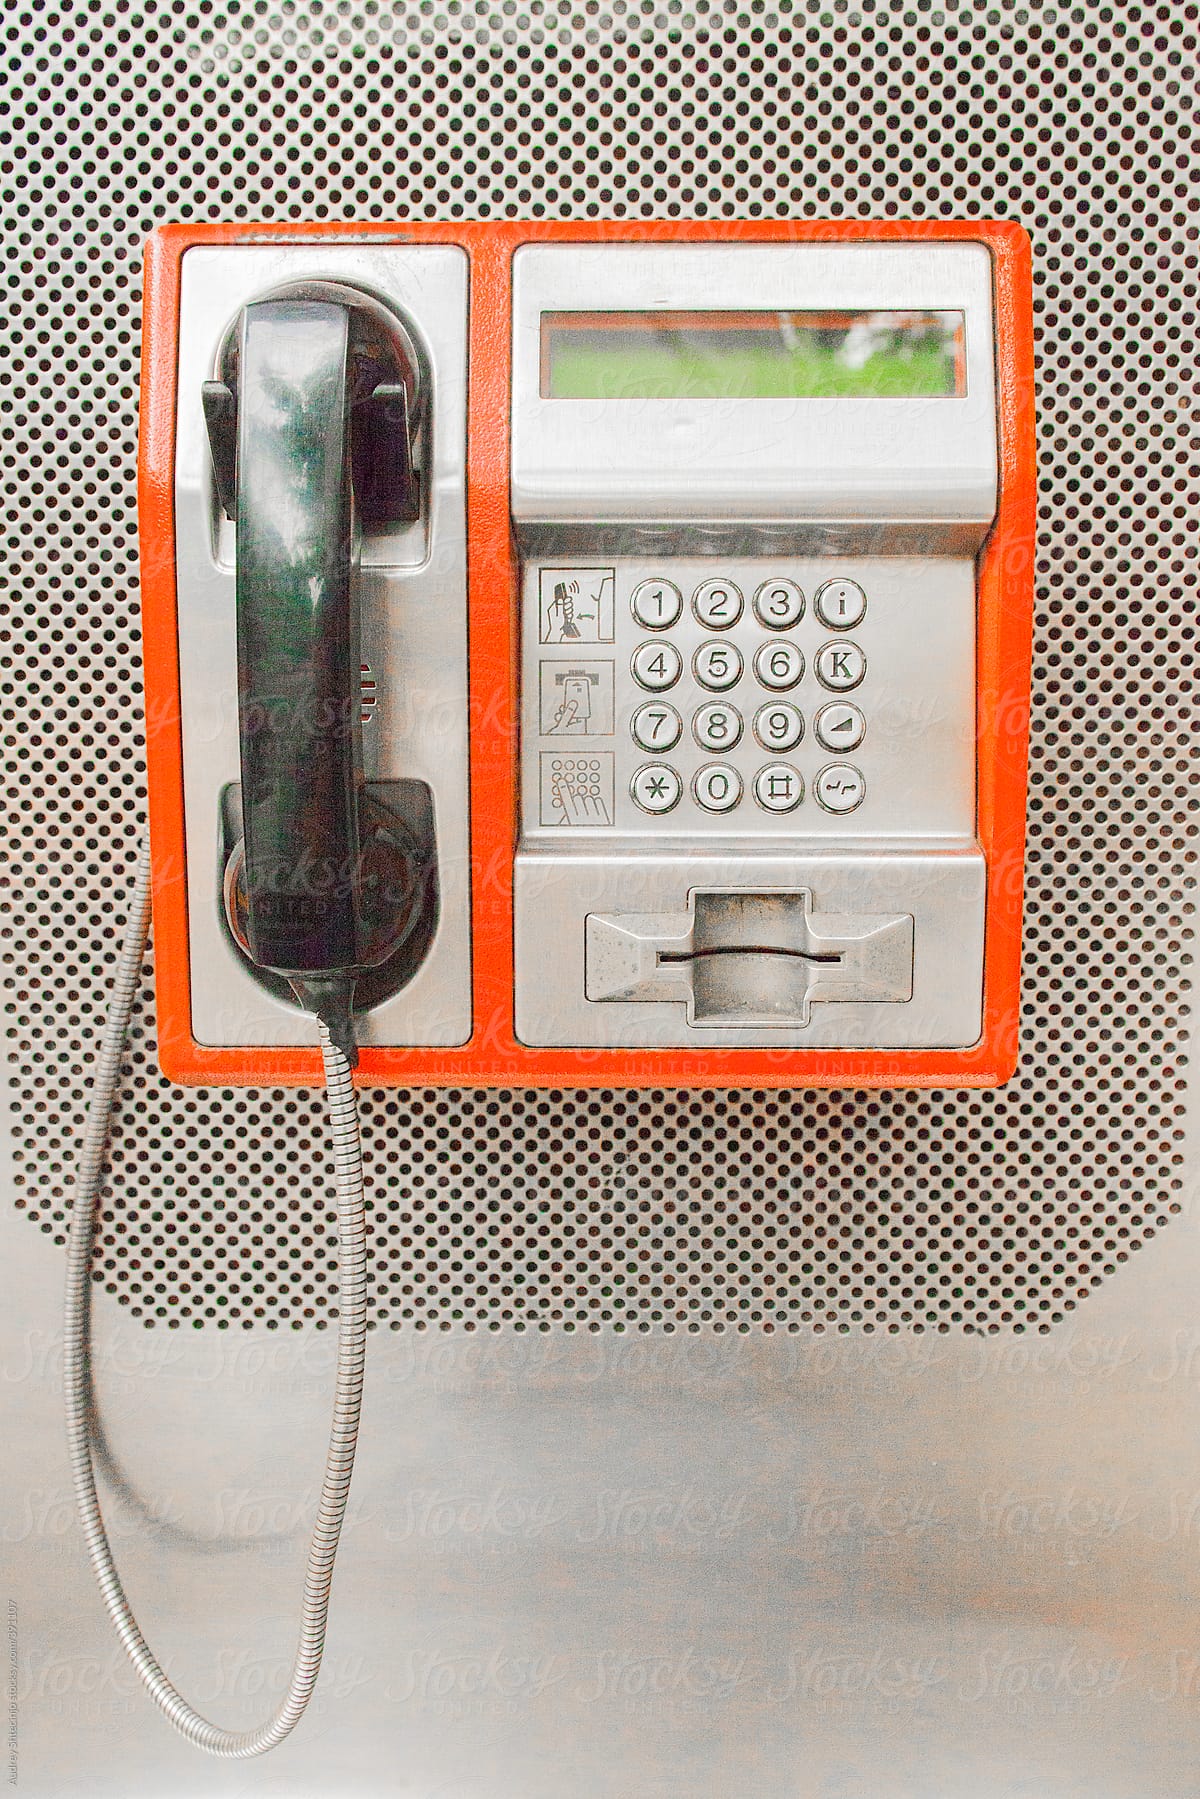 Old street telephone